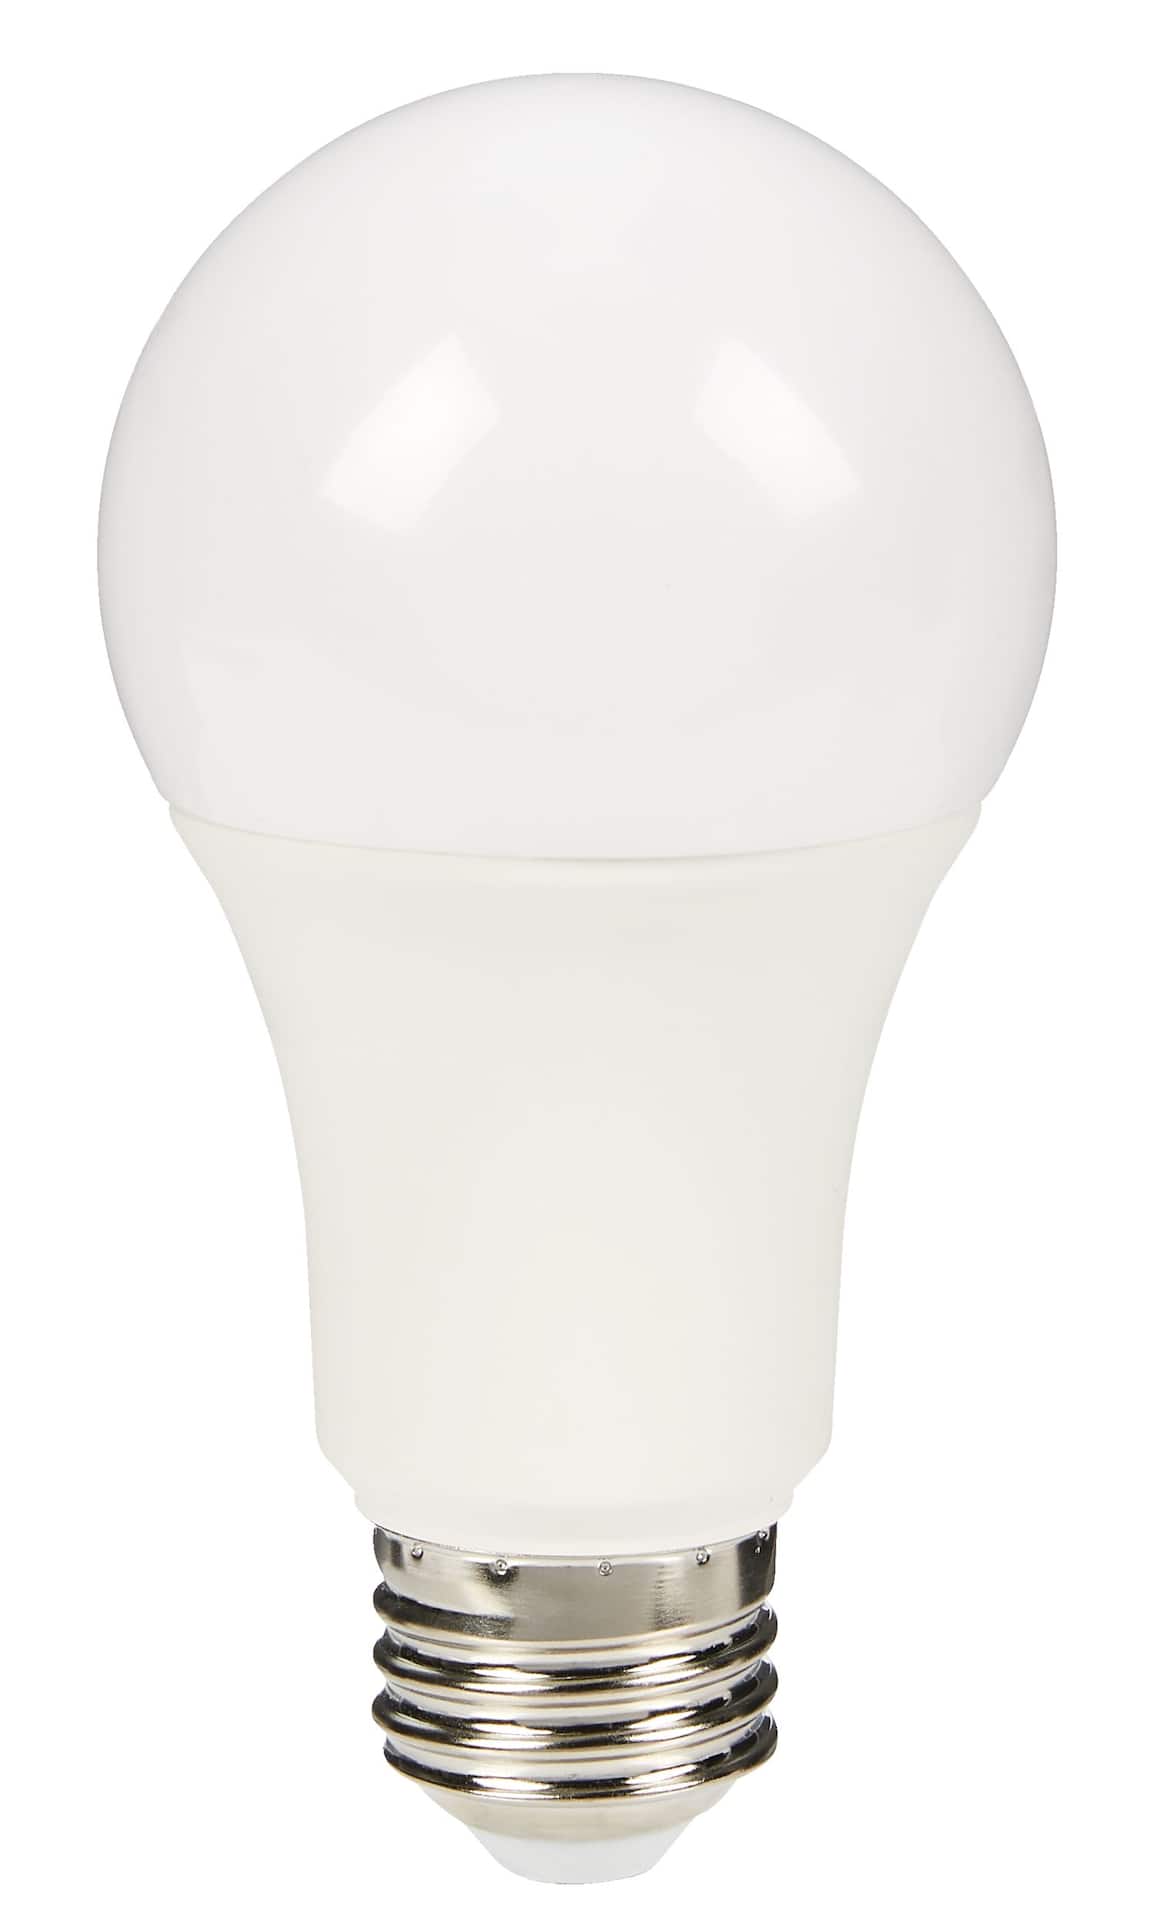 NOMA A19 E26 Base Non-Dimmable LED Light Bulbs, 5000K, 1500 Lumens